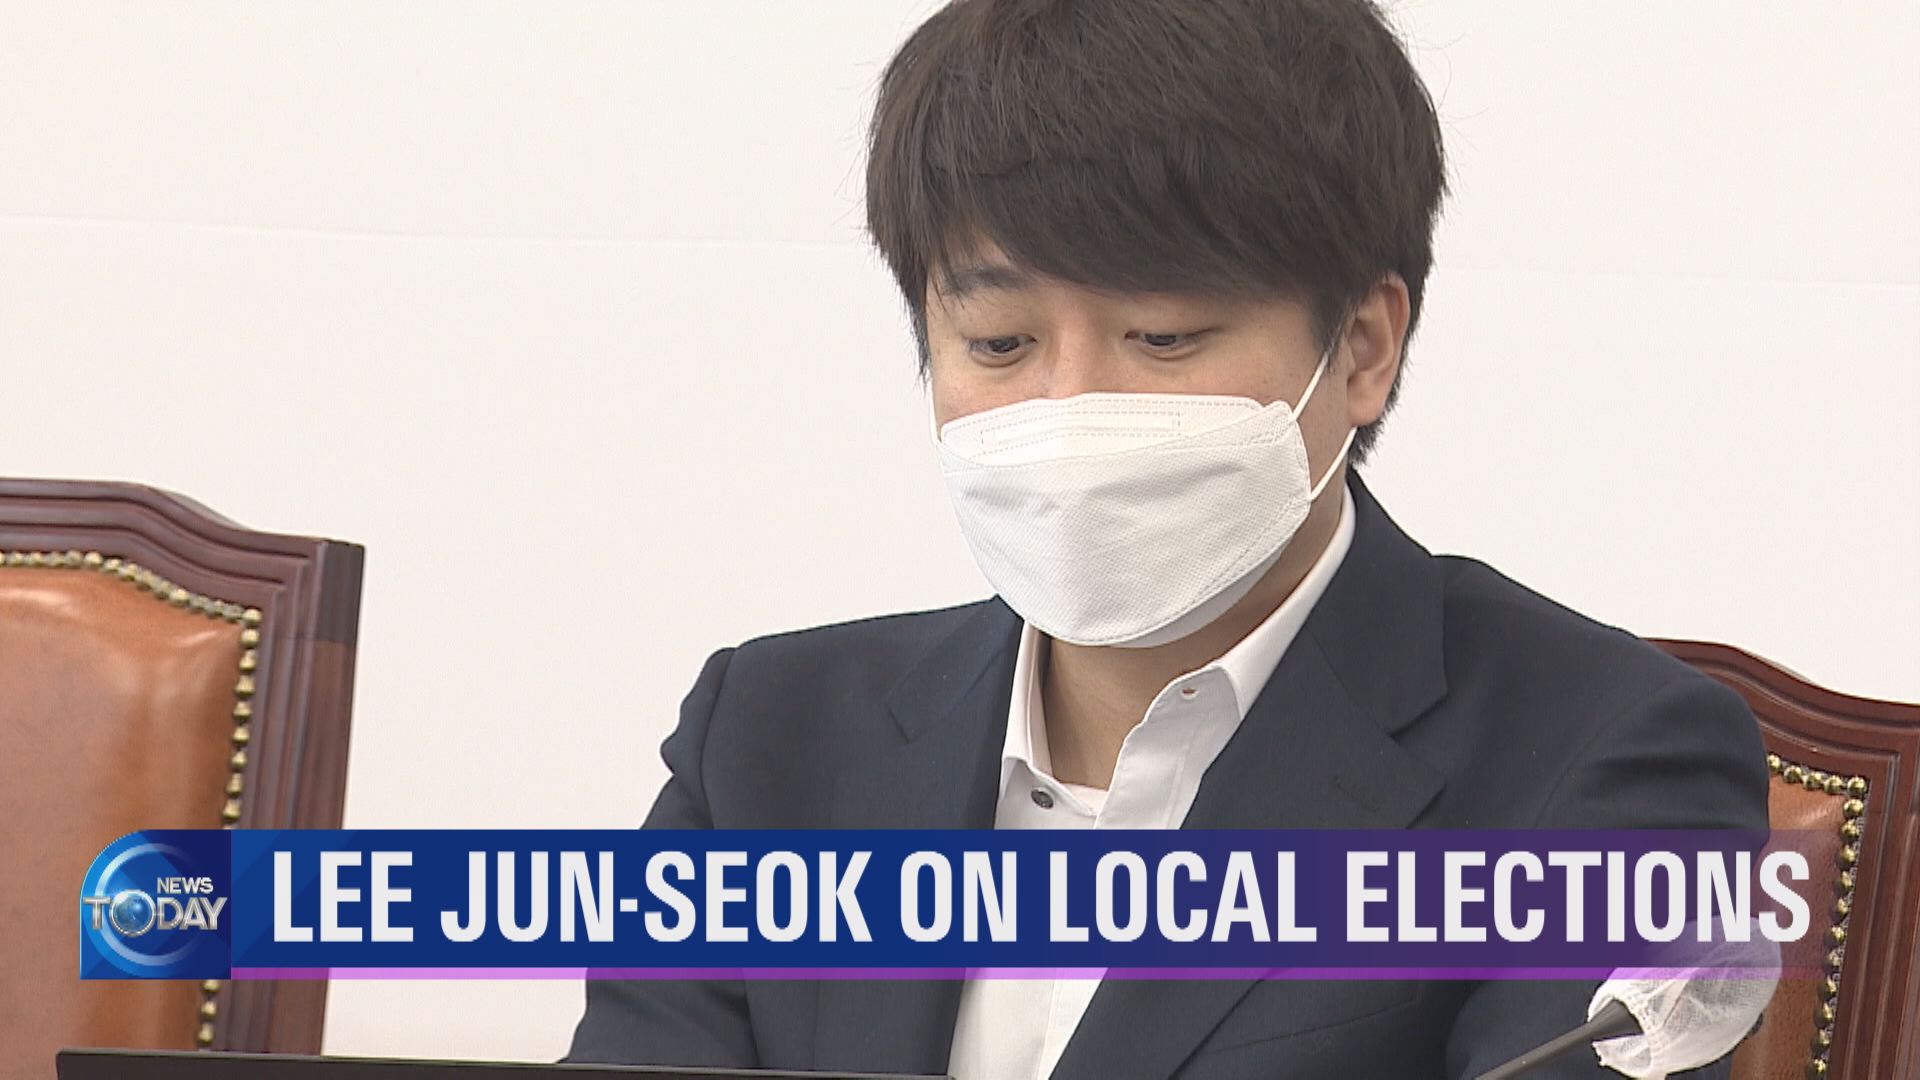 LEE JUN-SEOK ON LOCAL ELECTIONS